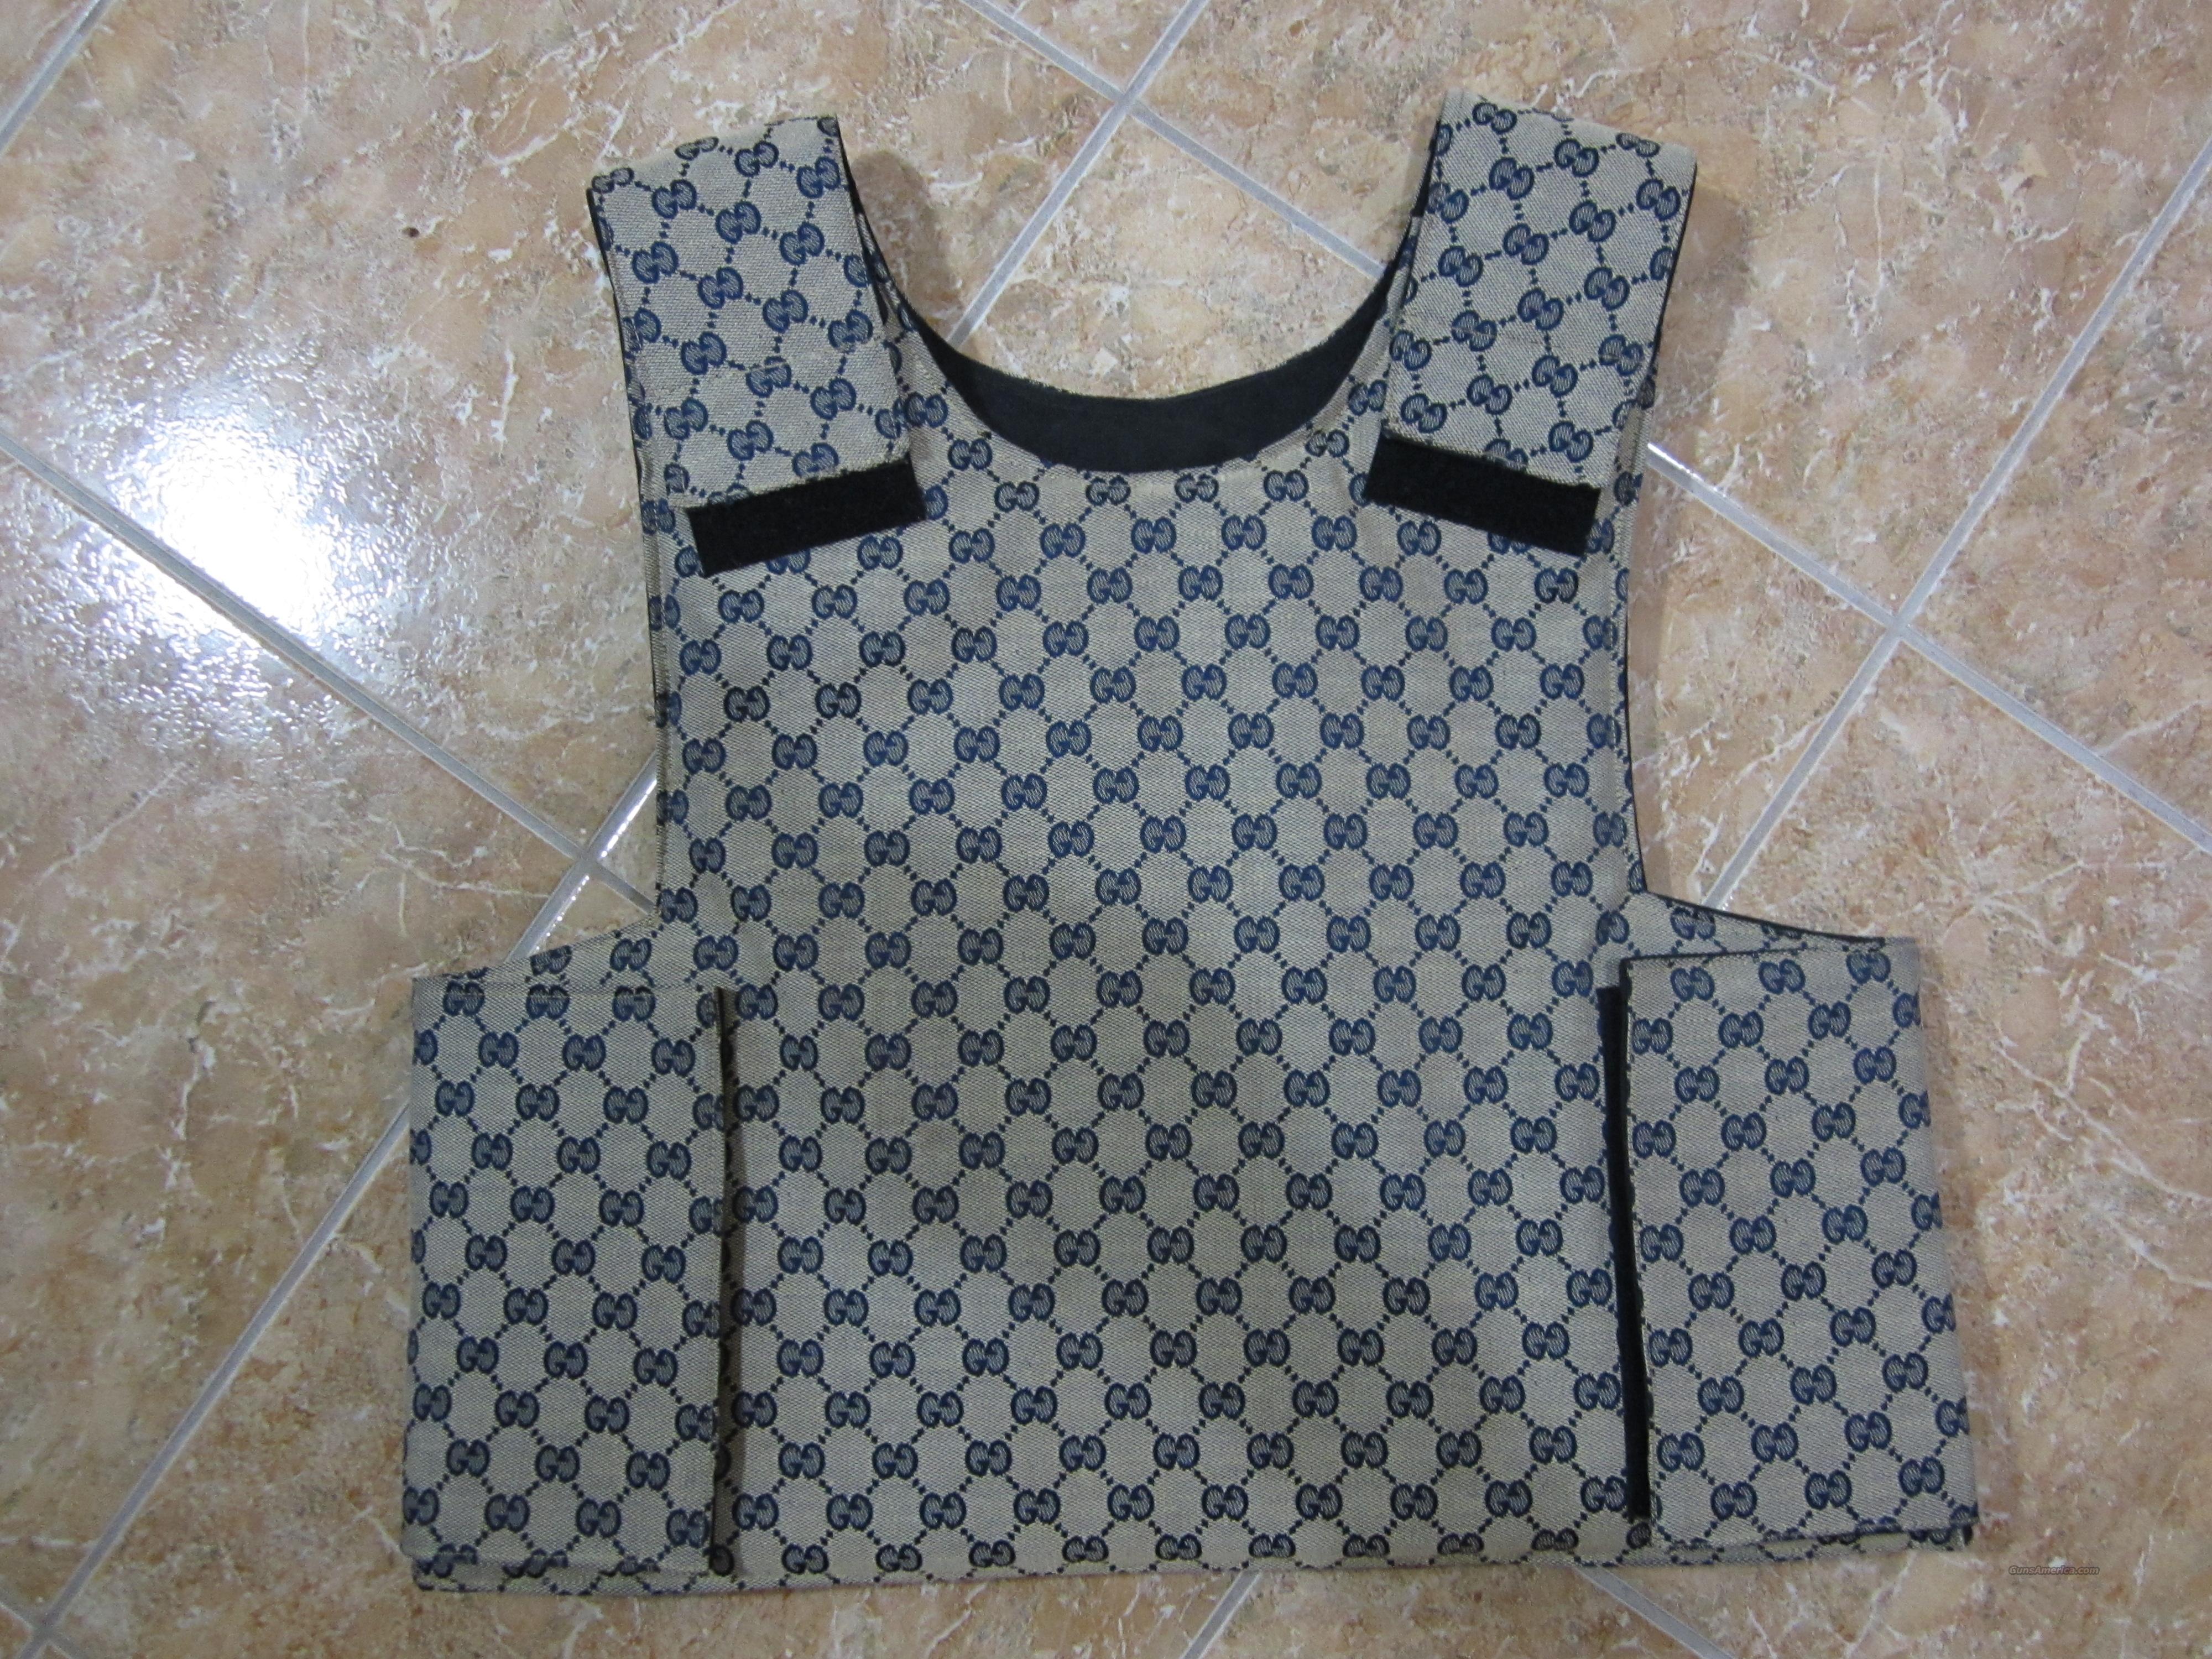 Bullet proof vest level 3a(Gucci) for sale